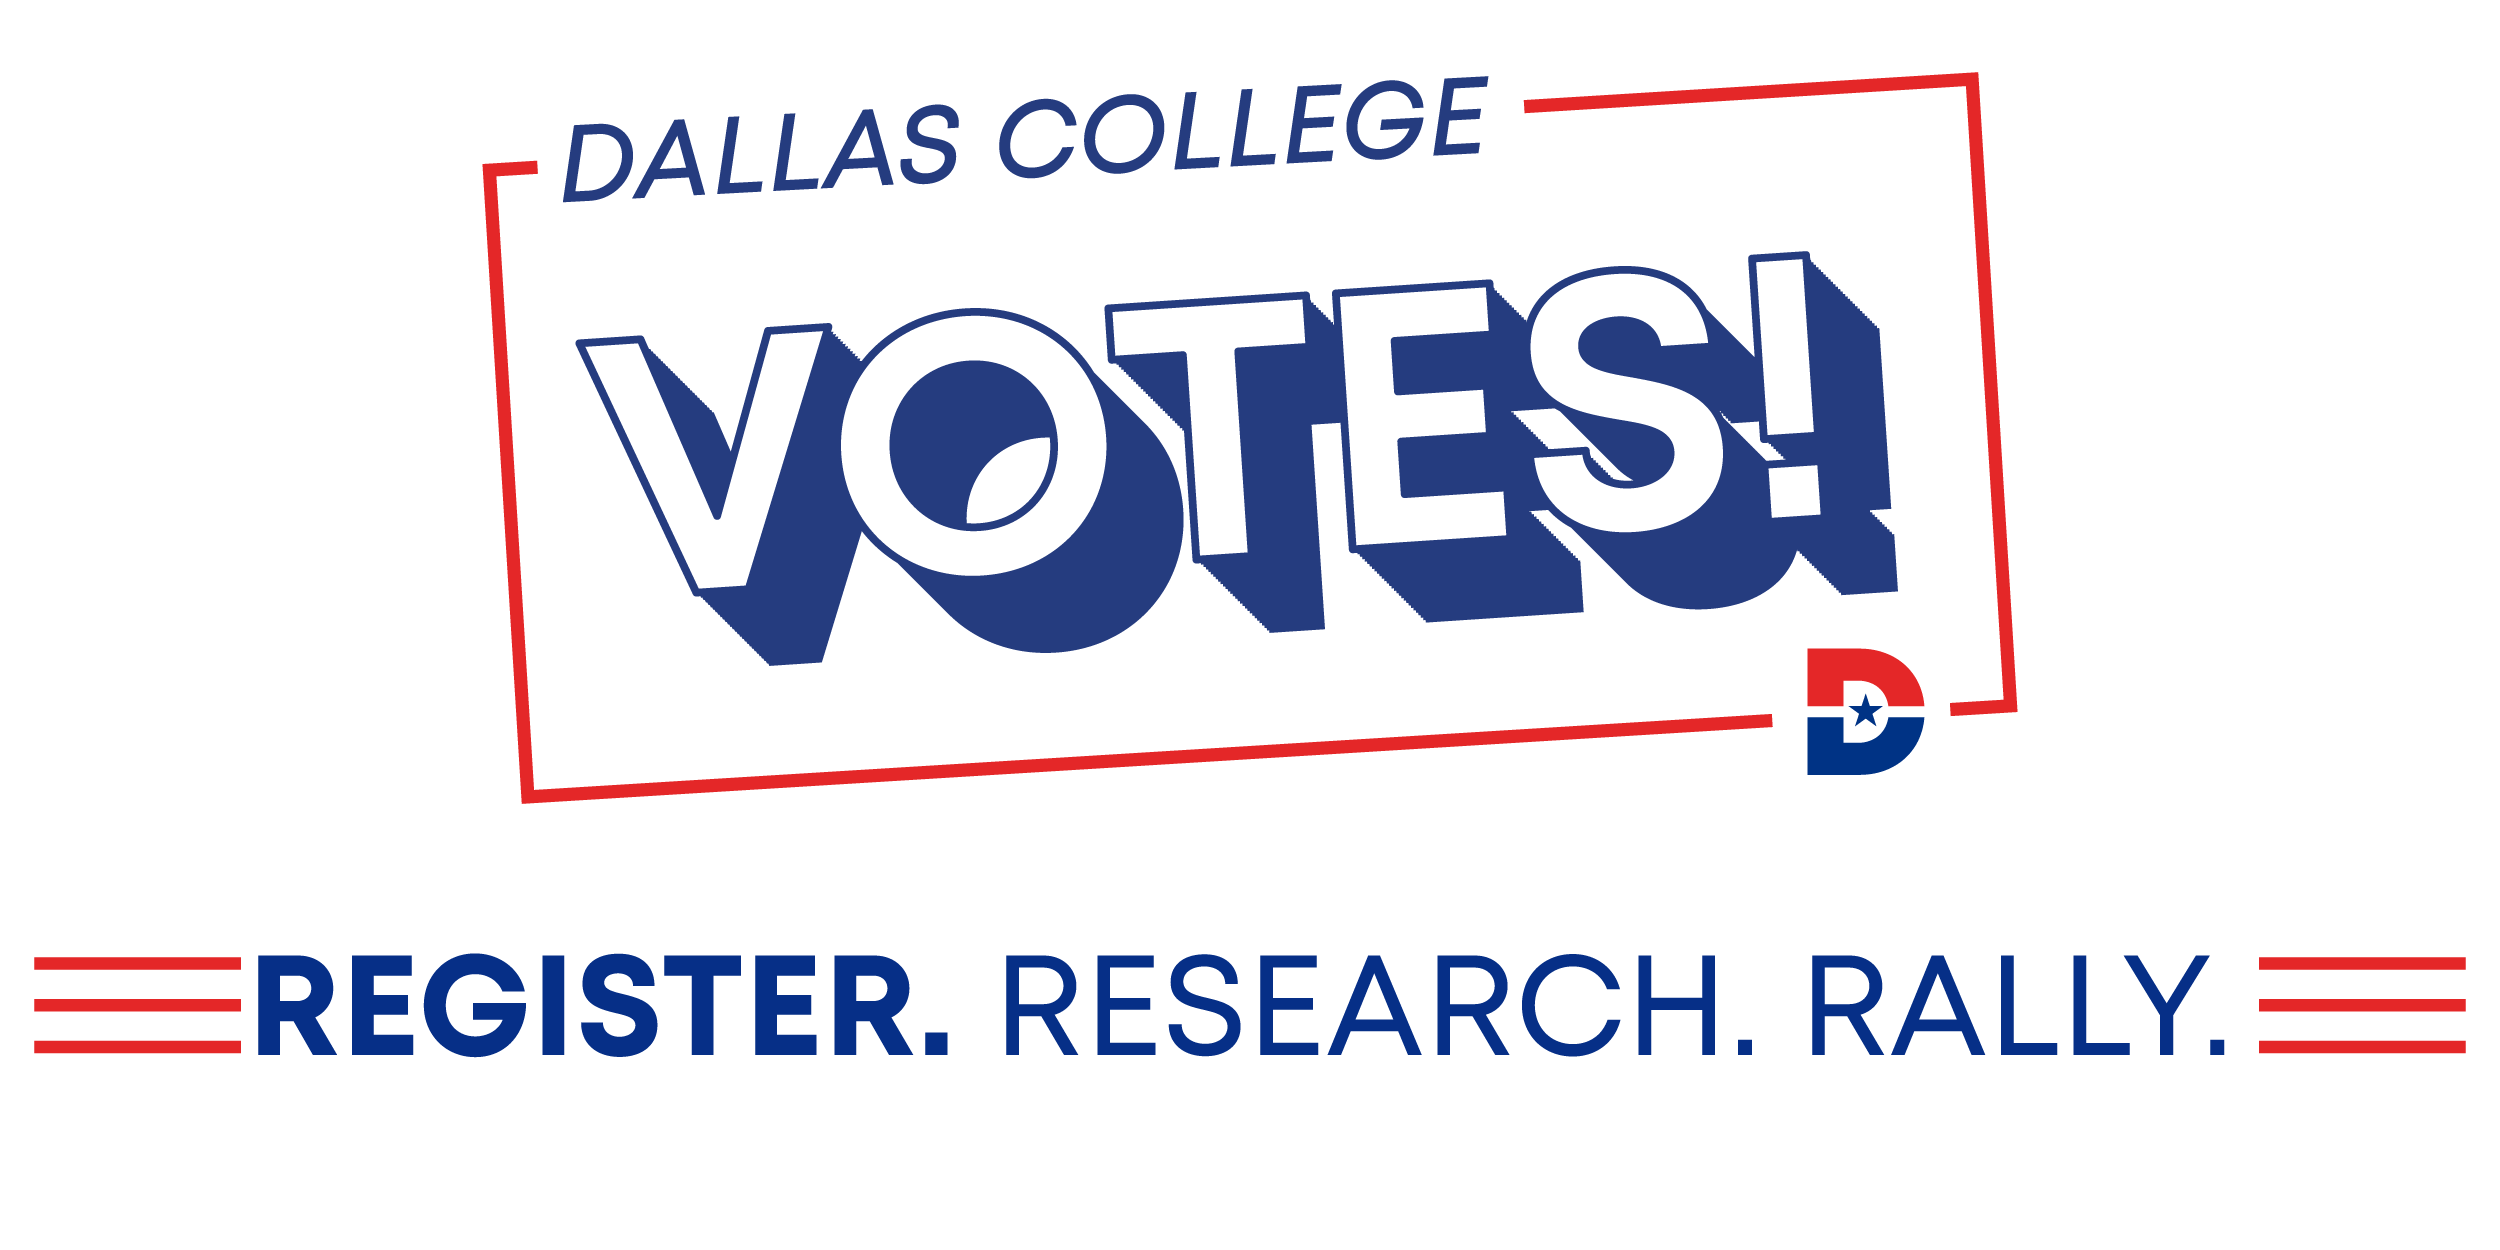 Dallas College Votes! Register, Research, Rally